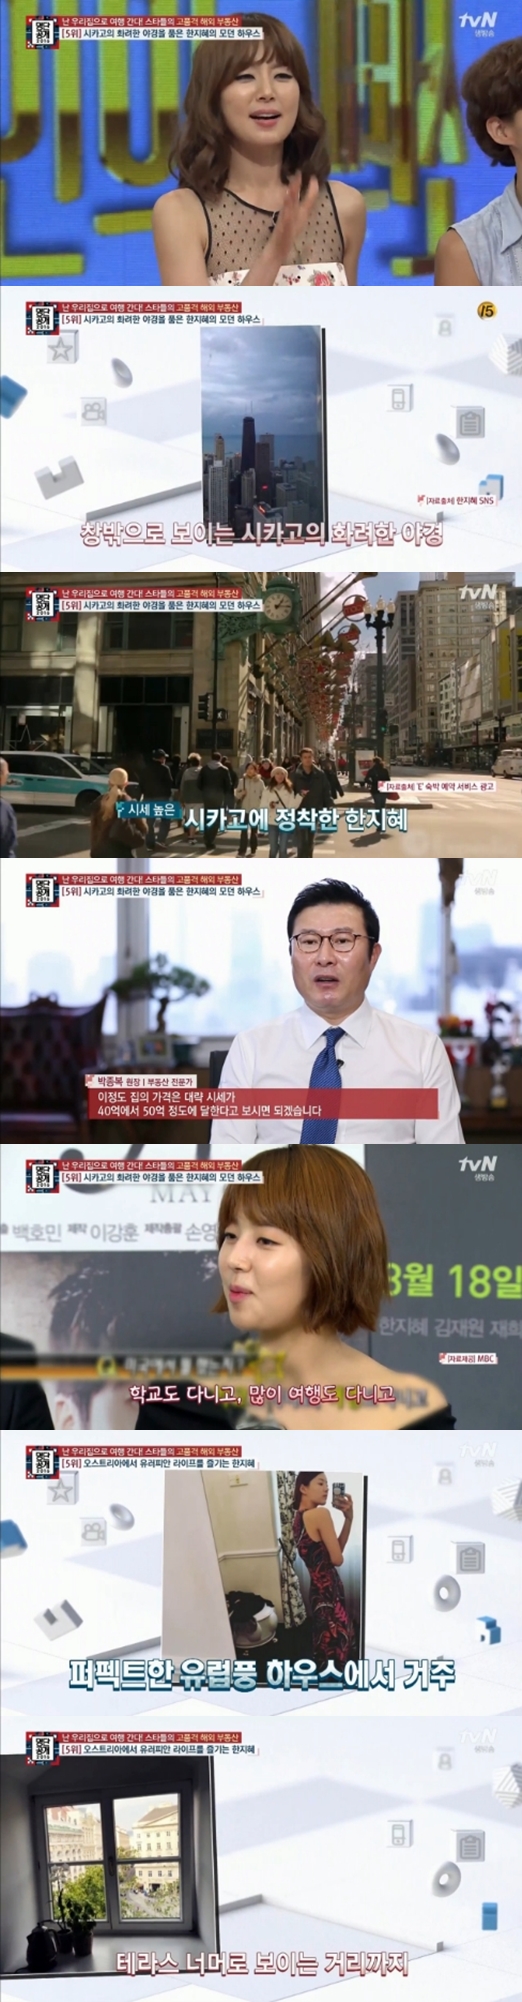 tvN '명단공개' 방송화면 캡처